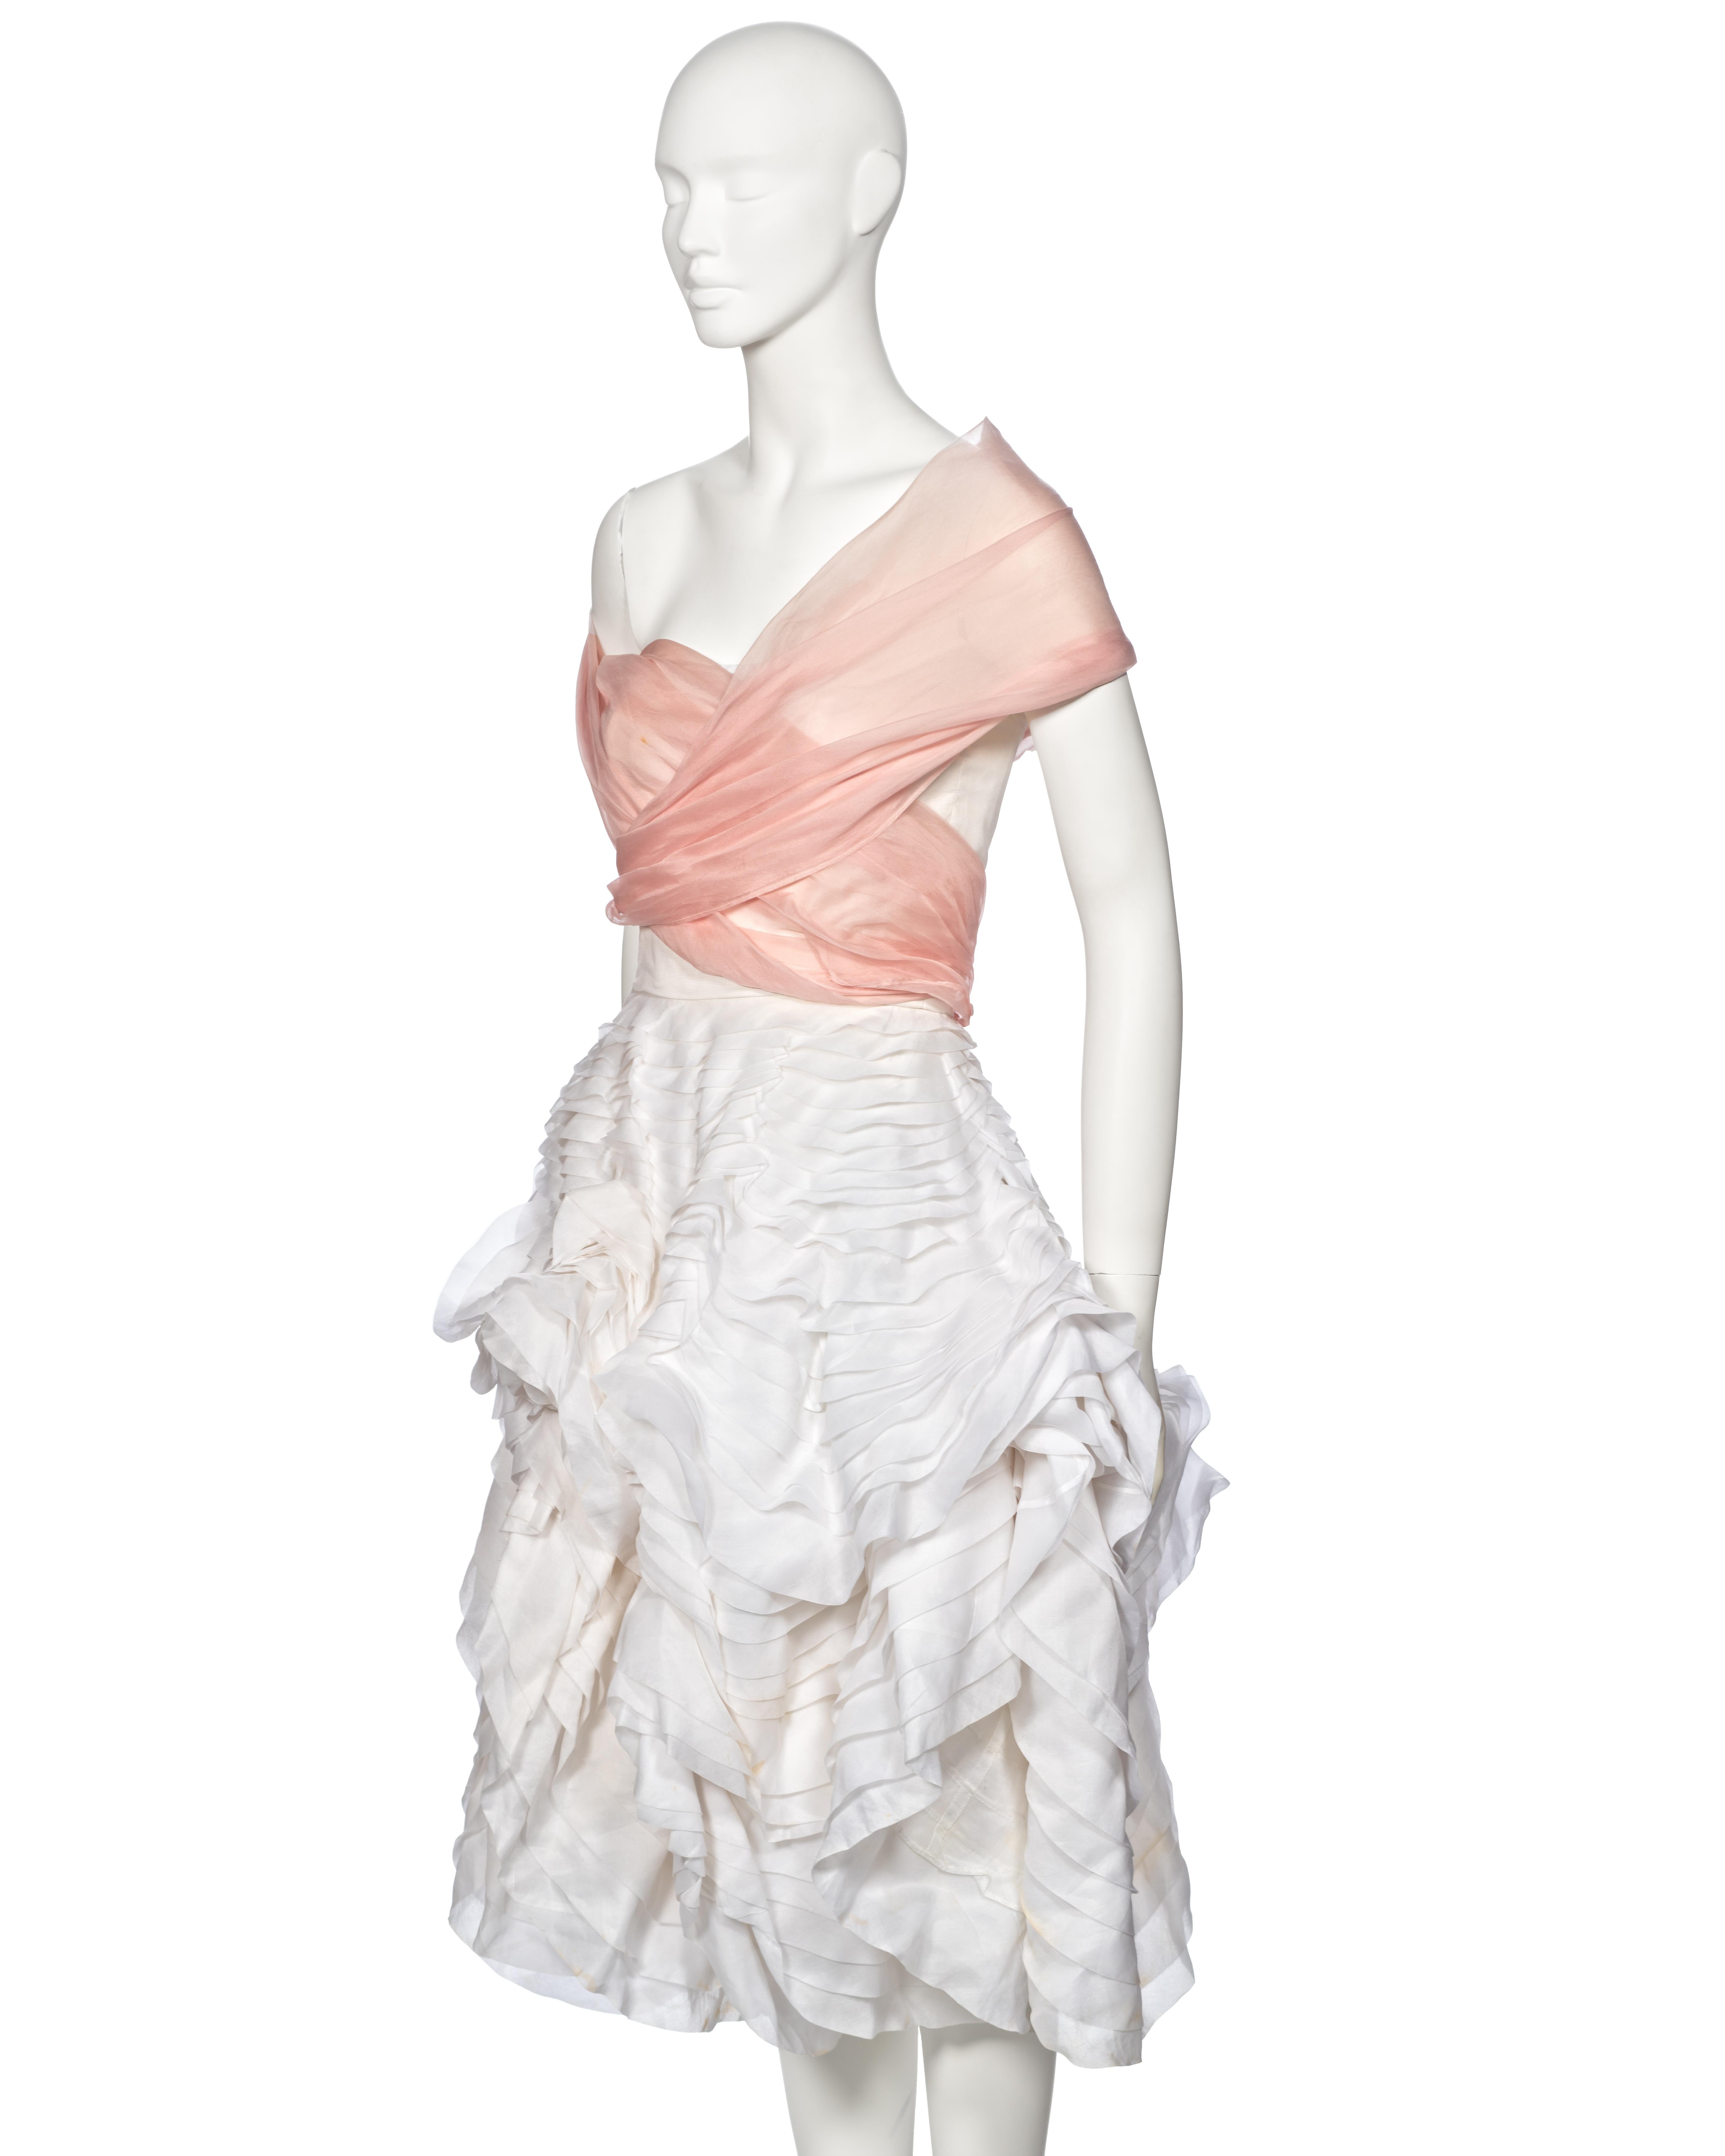 John Galliano Blanche DuBois Clam Dress, ss 1988 For Sale 2